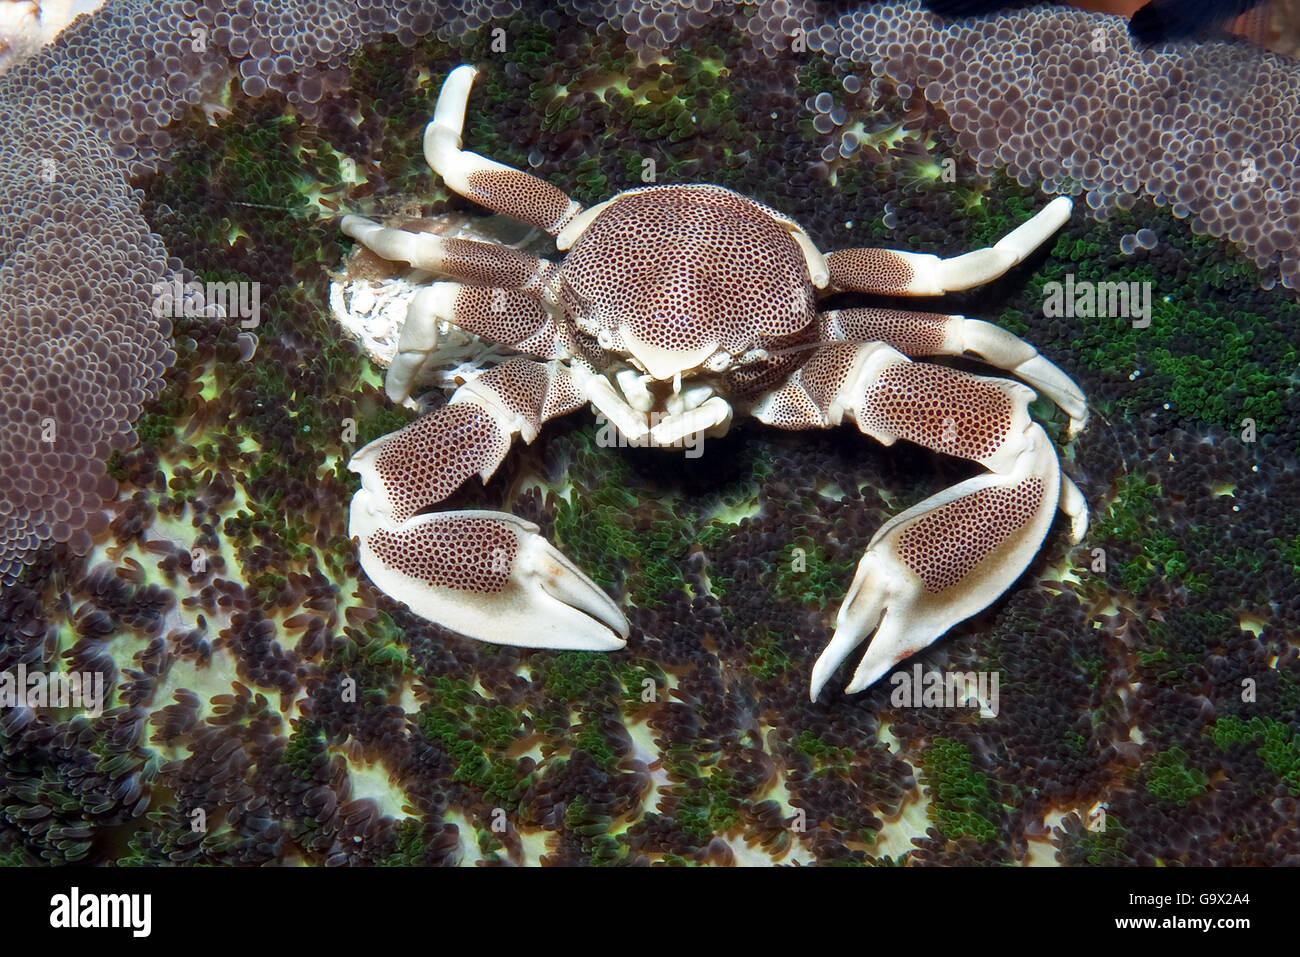 Anemone Porcelain crab, Indo-Pacific / (Neopetrolisthes maculatus) Stock Photo